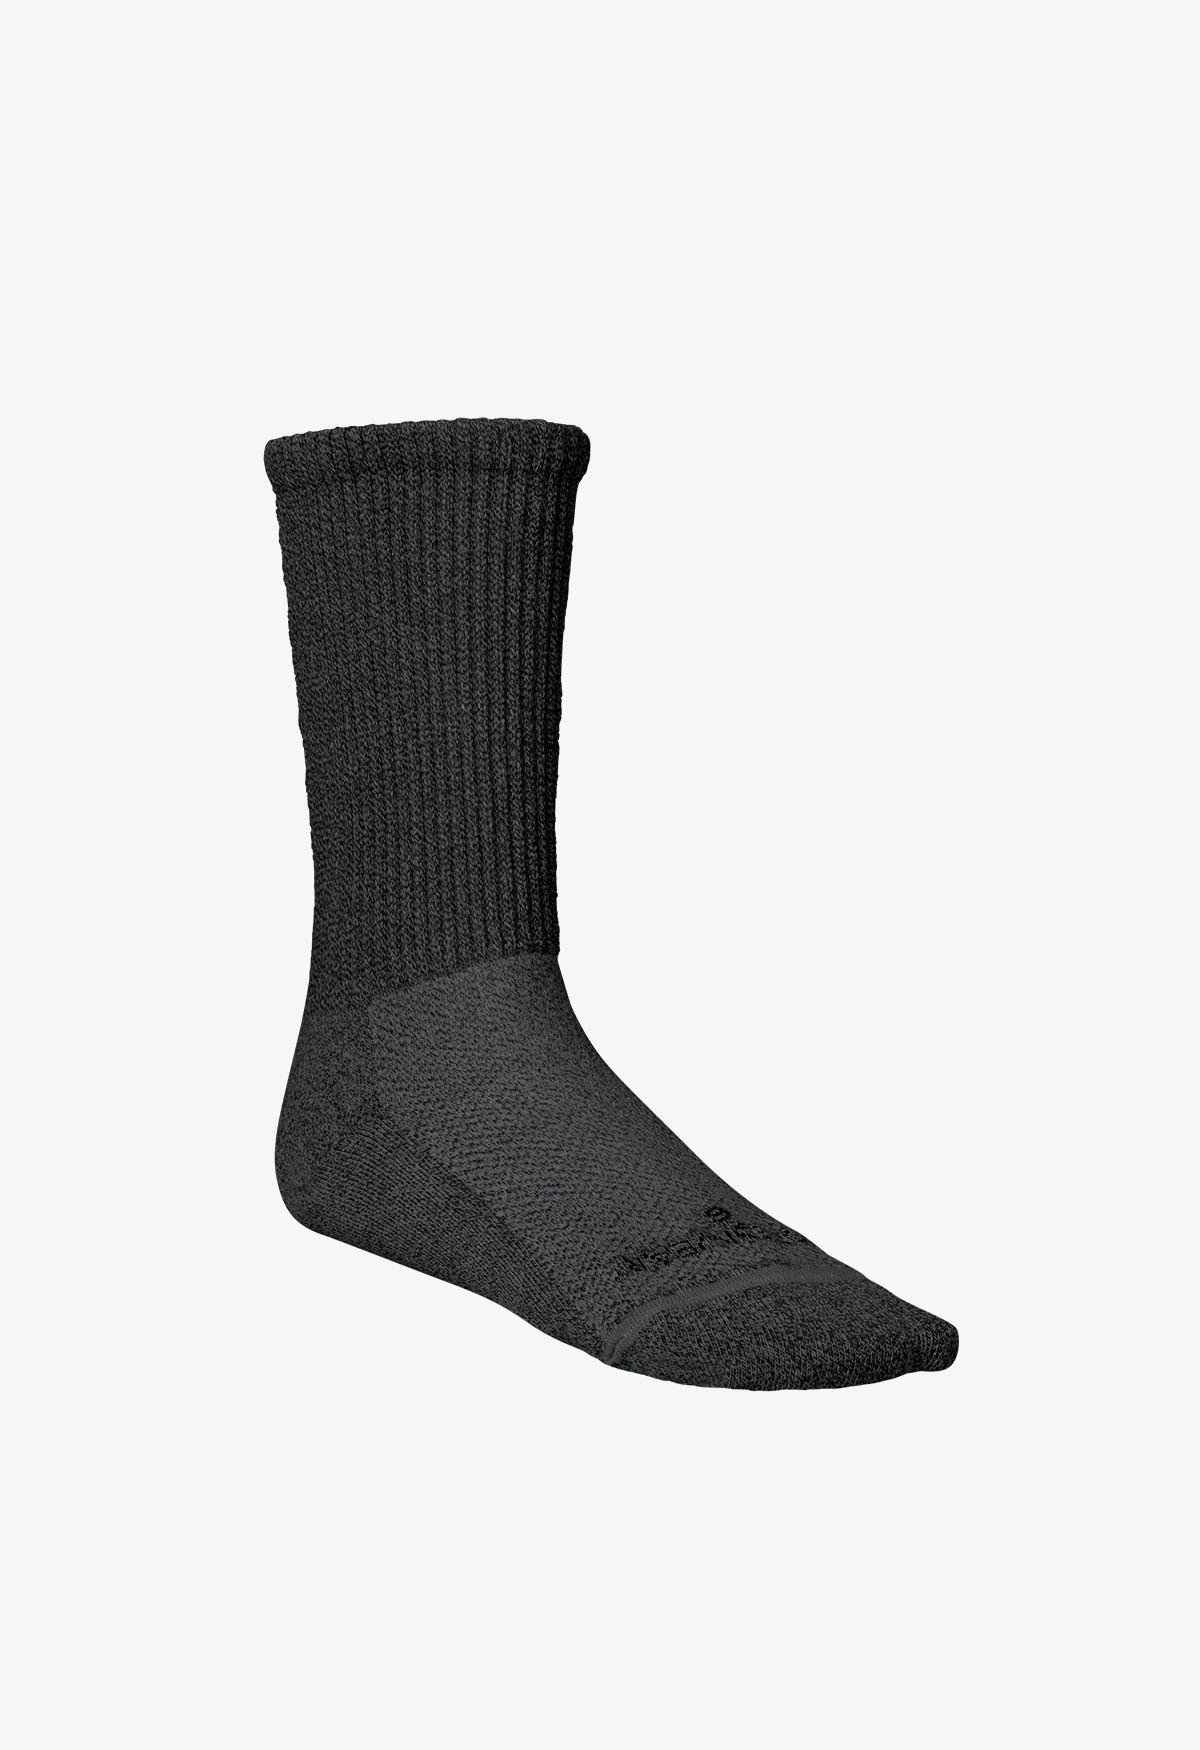 Incrediwear Circulation Socks Ankle Black